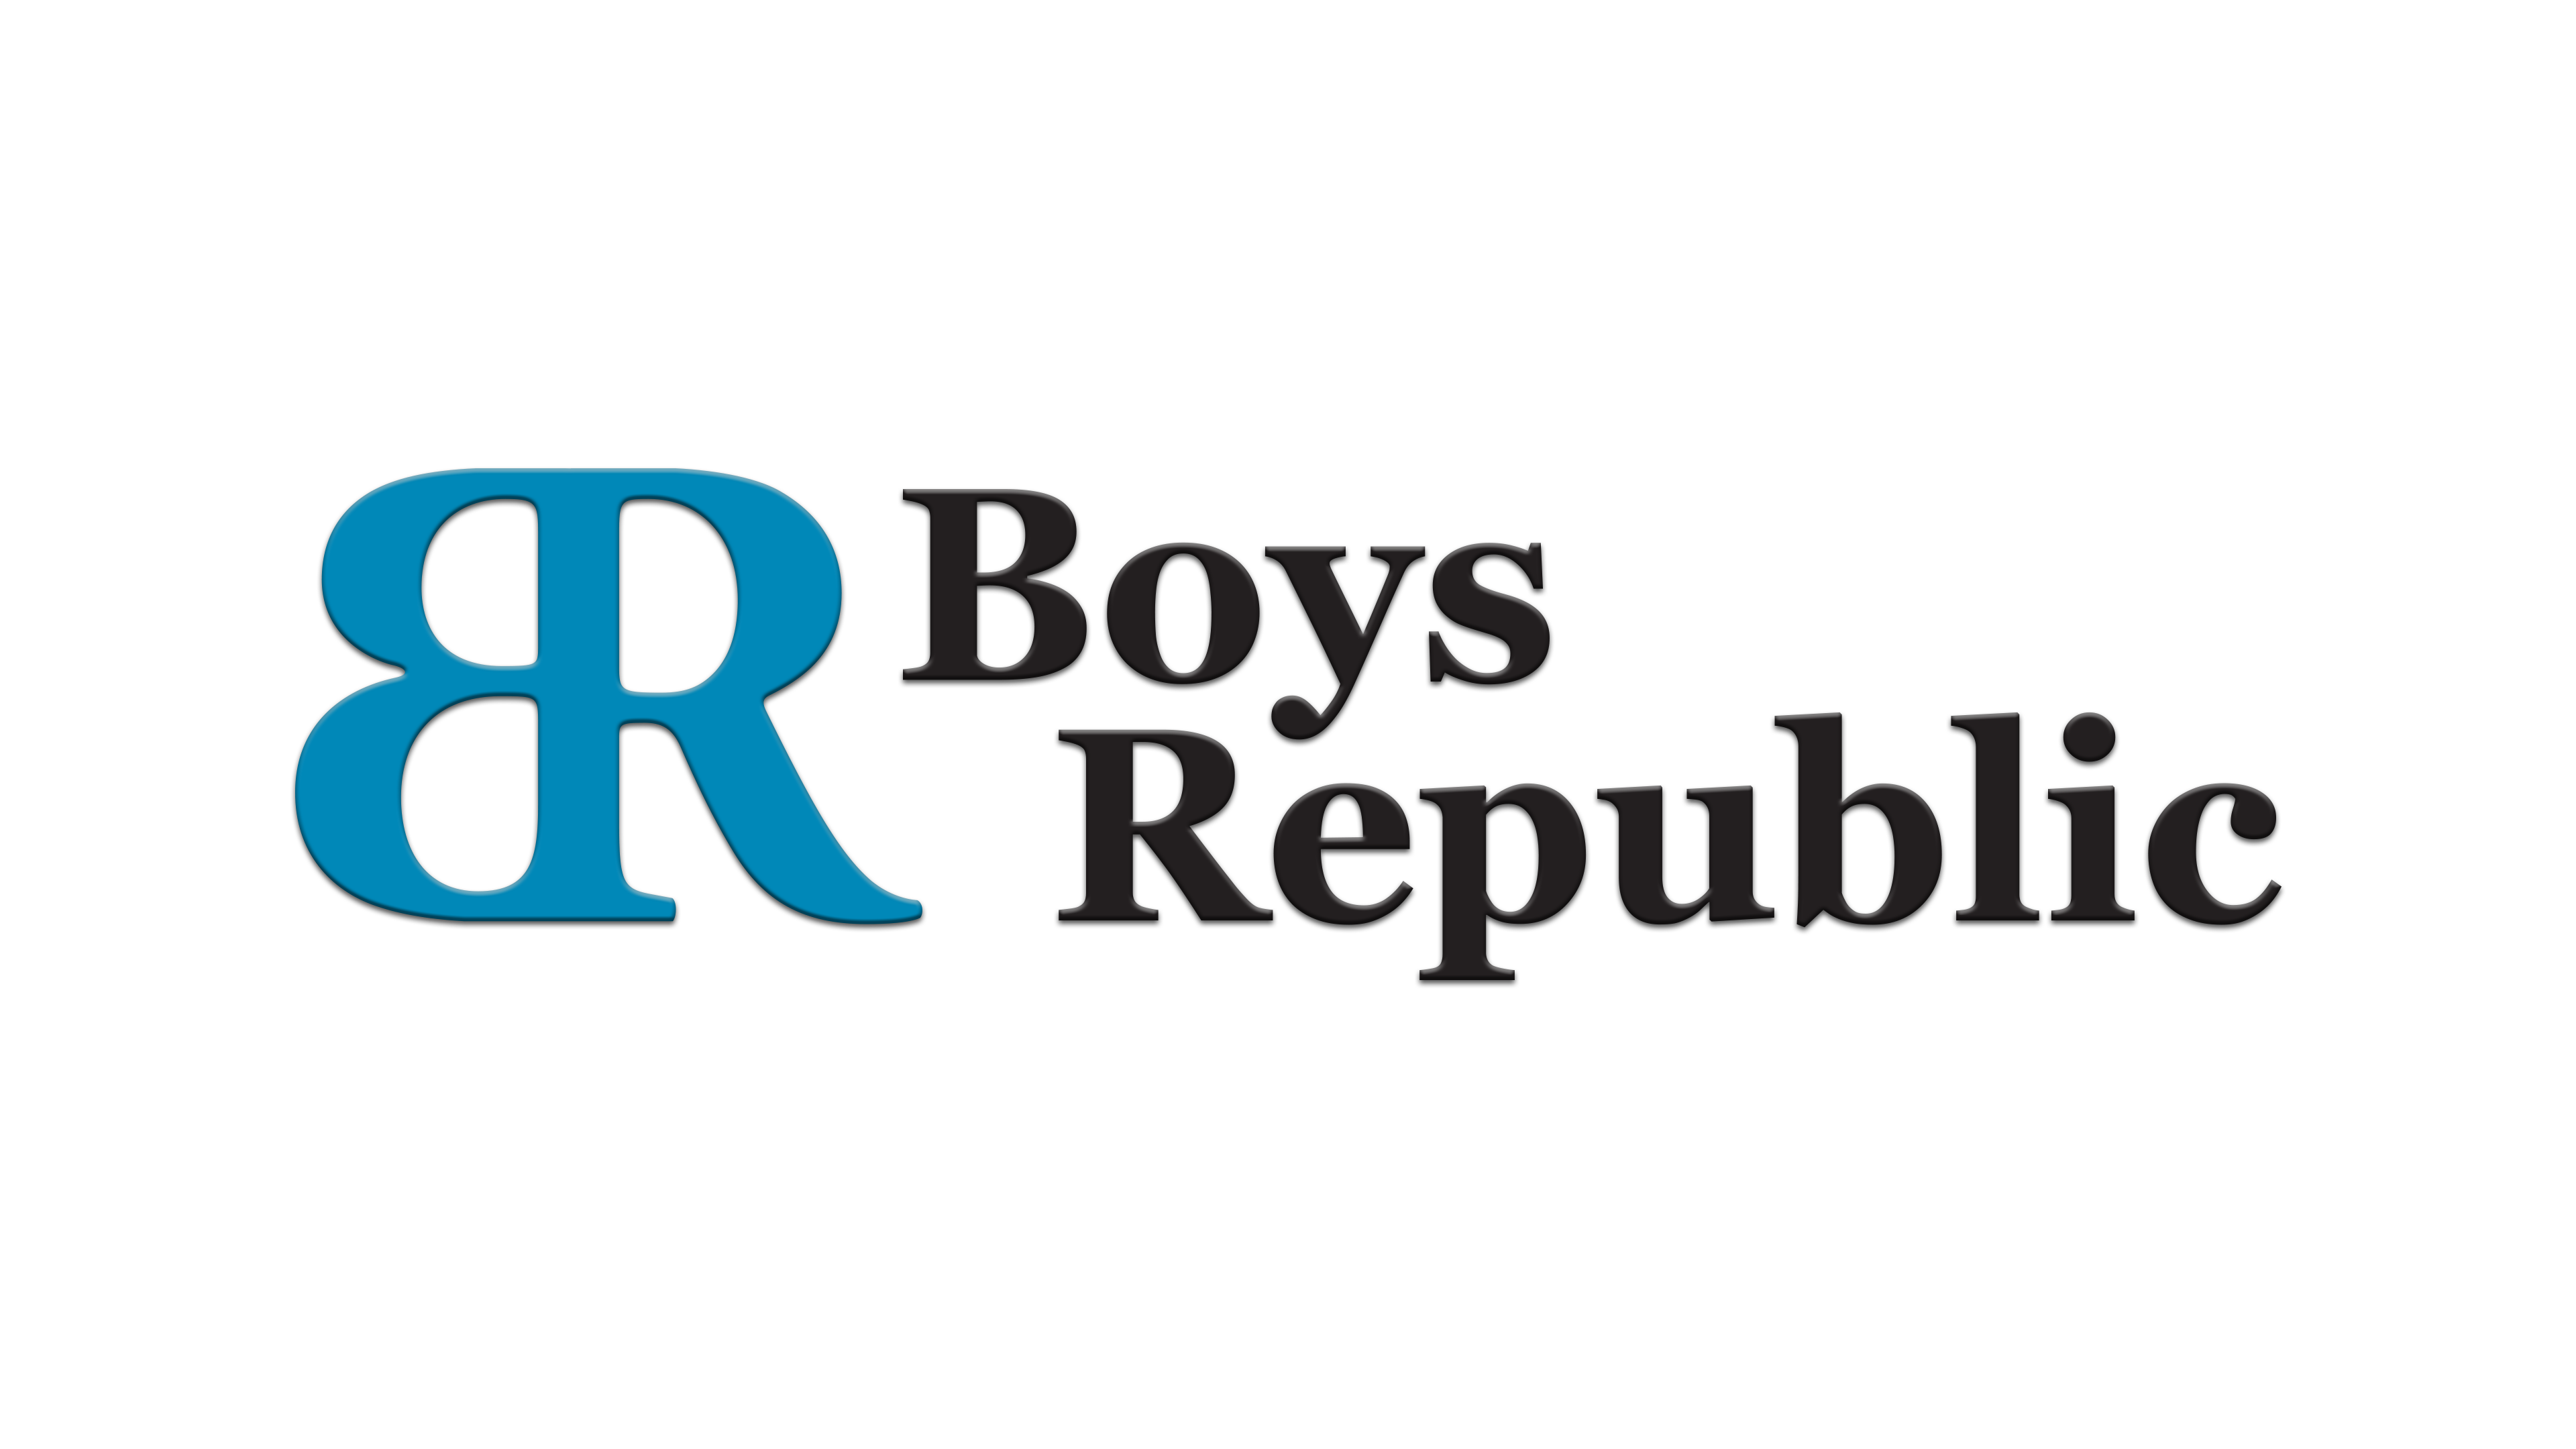 BOYS REPUBLIC LOGO 307UHD